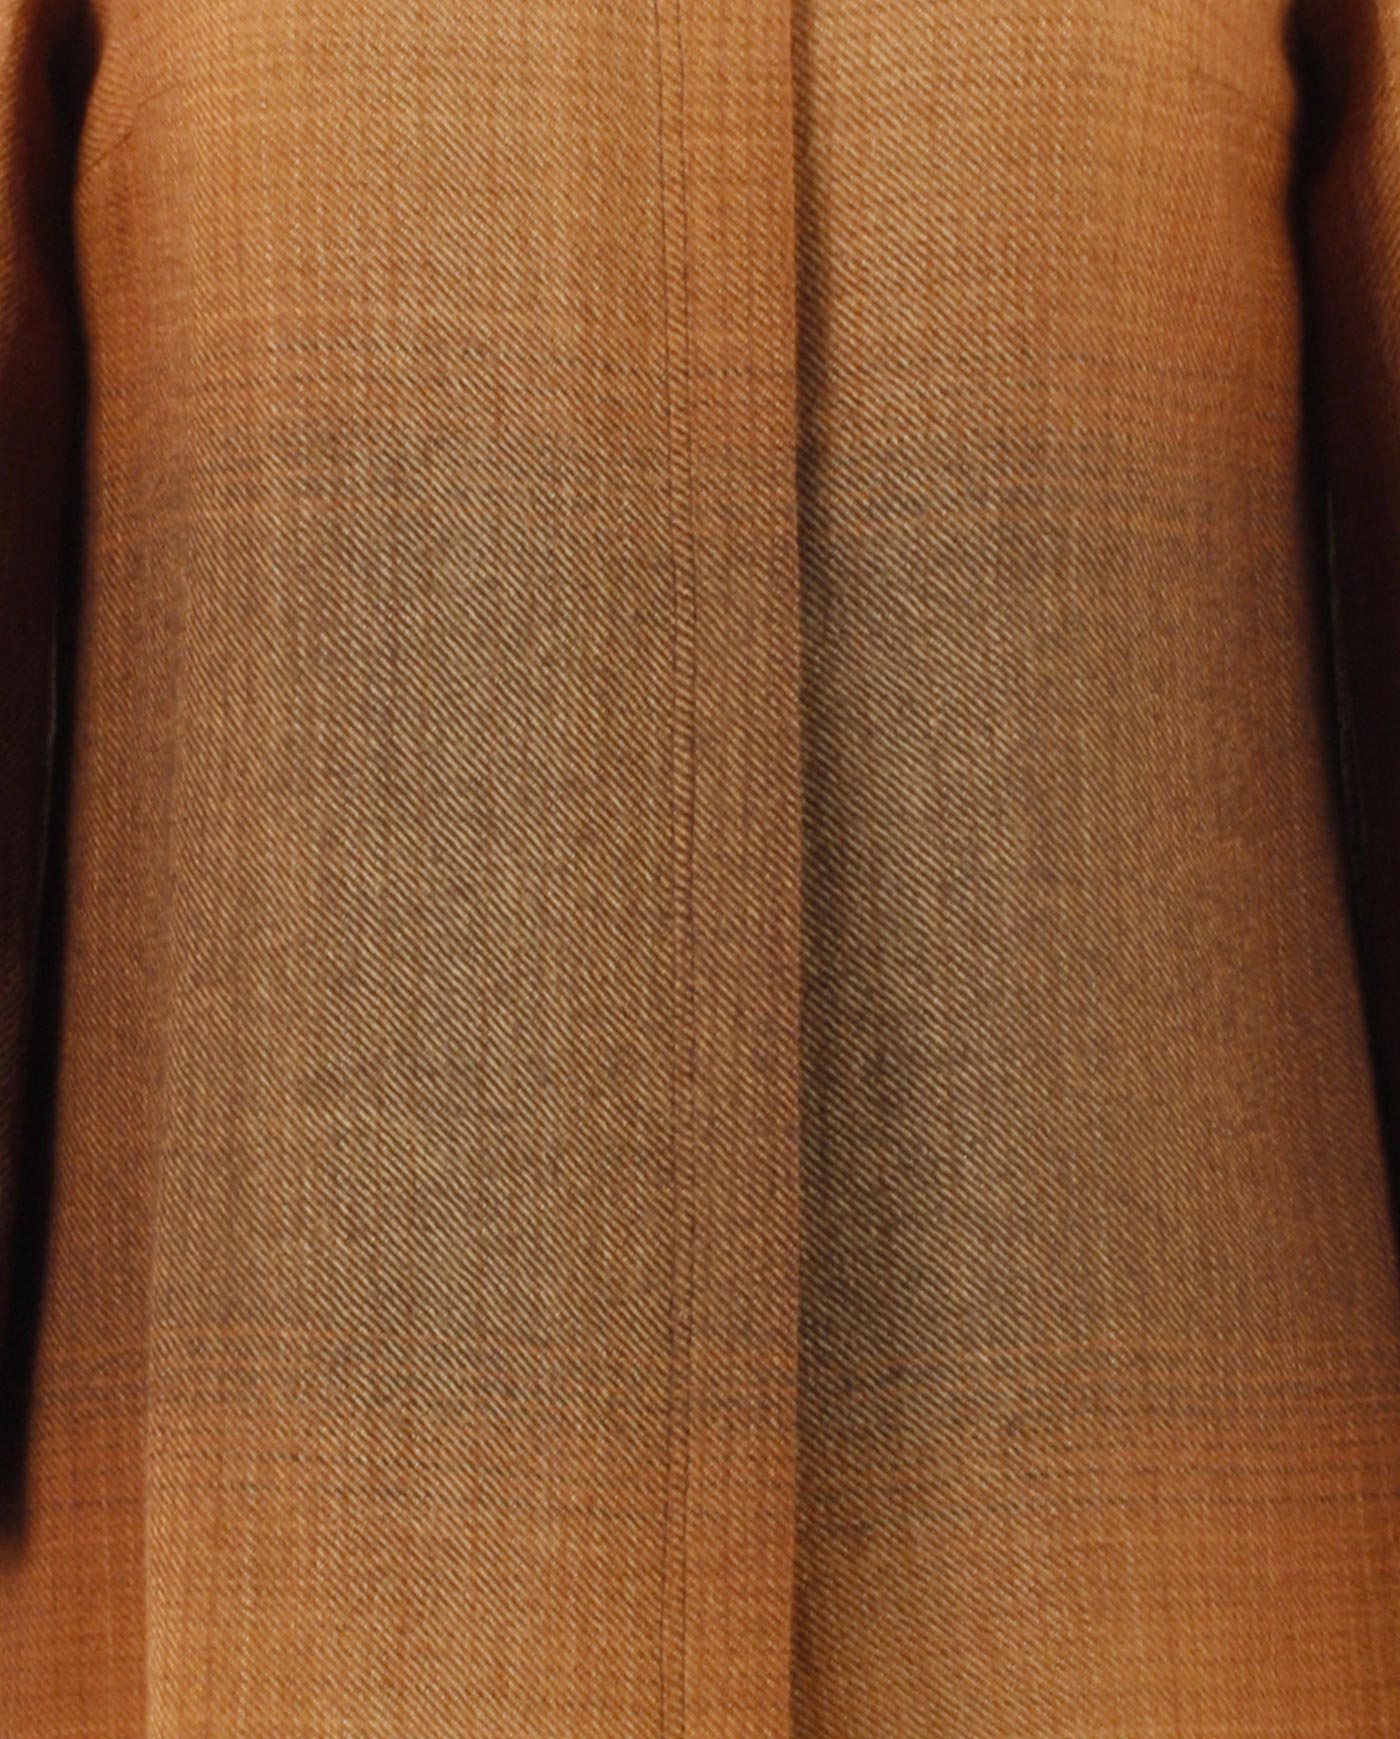 NO LABEL pure wool coat 60/70s